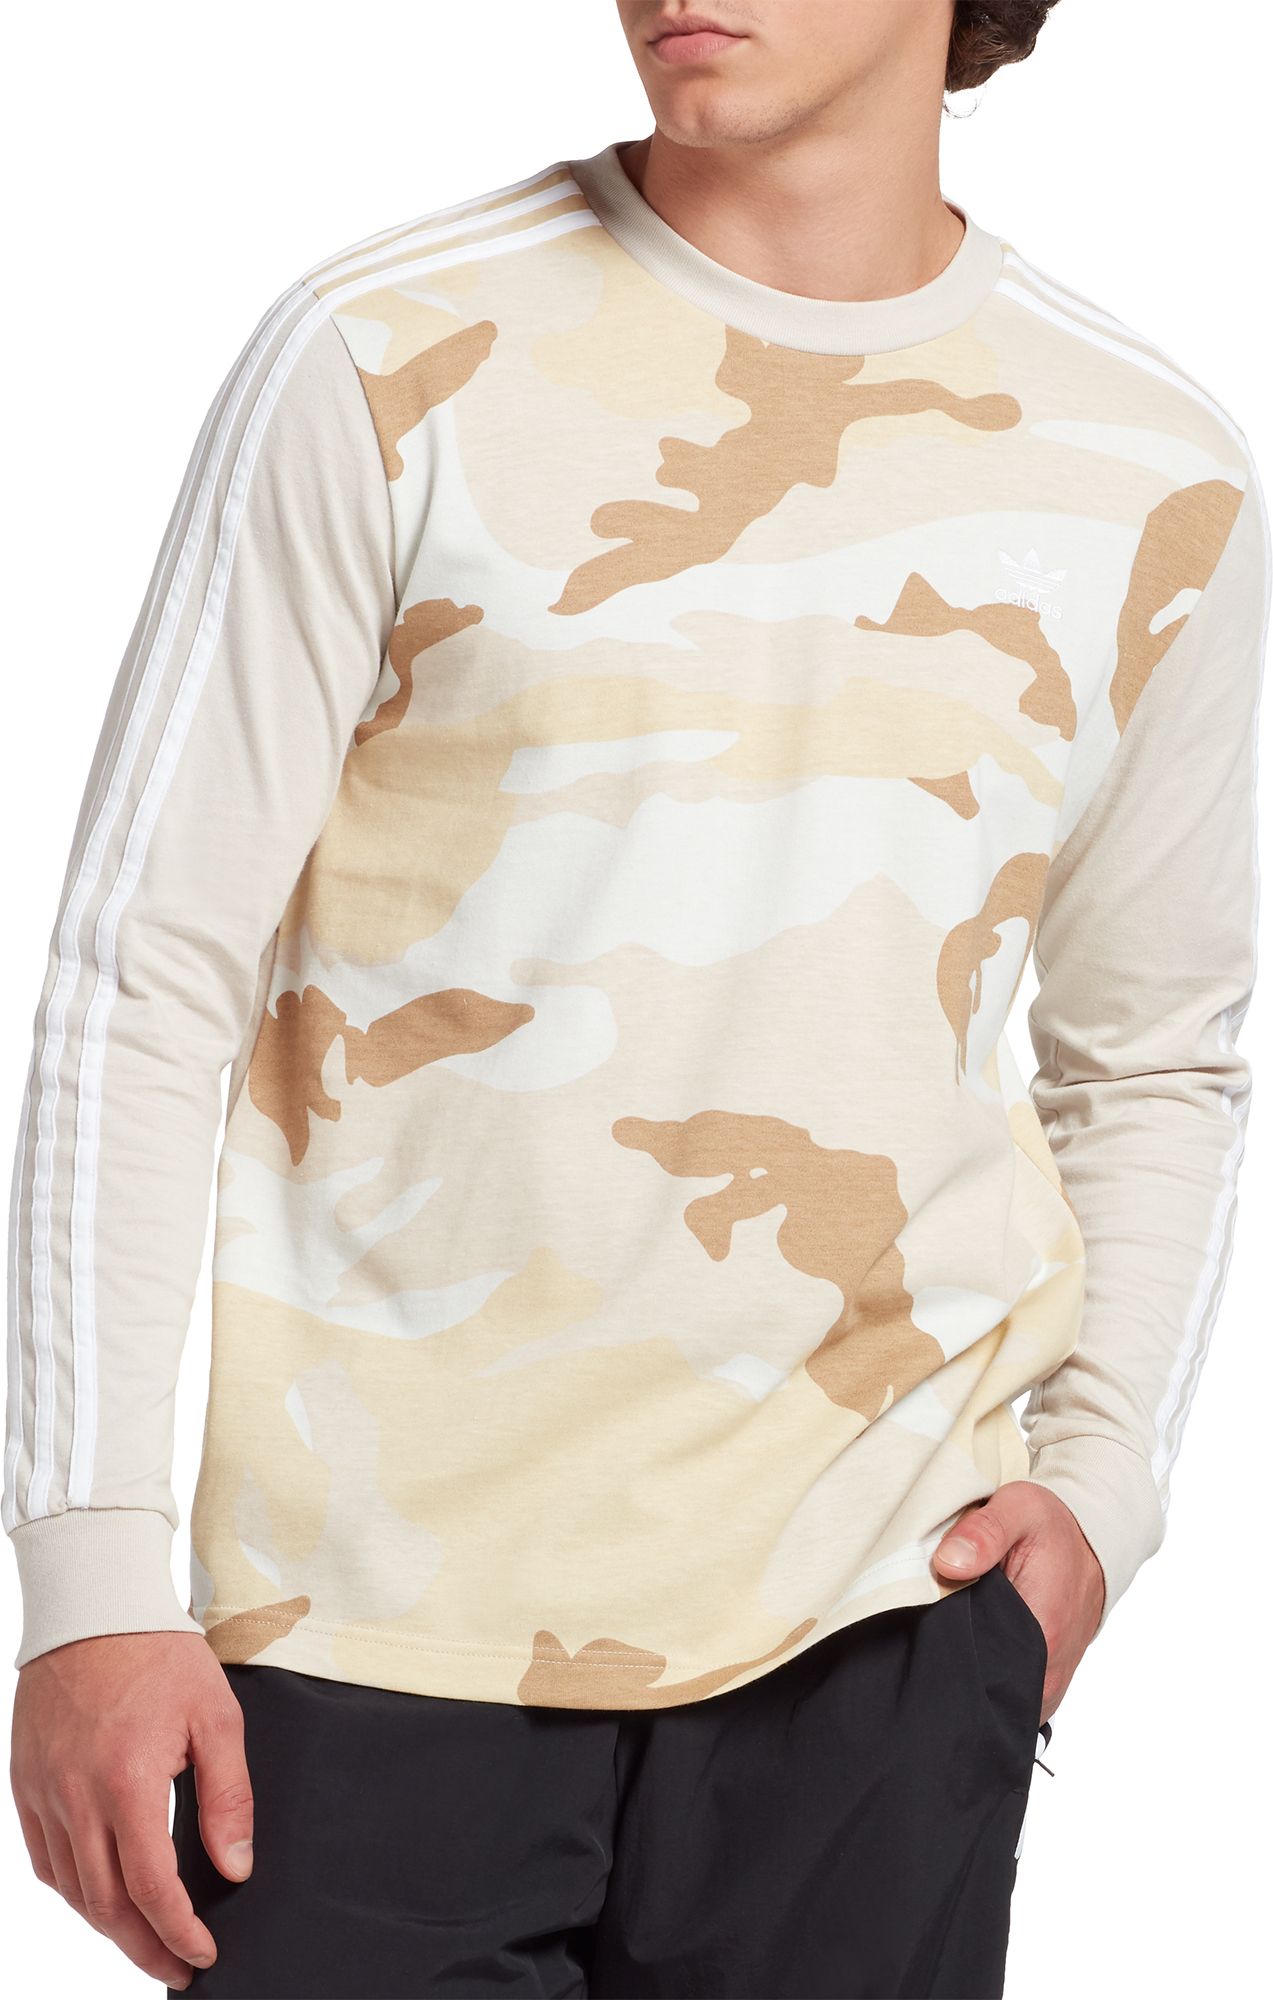 adidas Originals Men's Camouflage Long Sleeve Shirt - .97